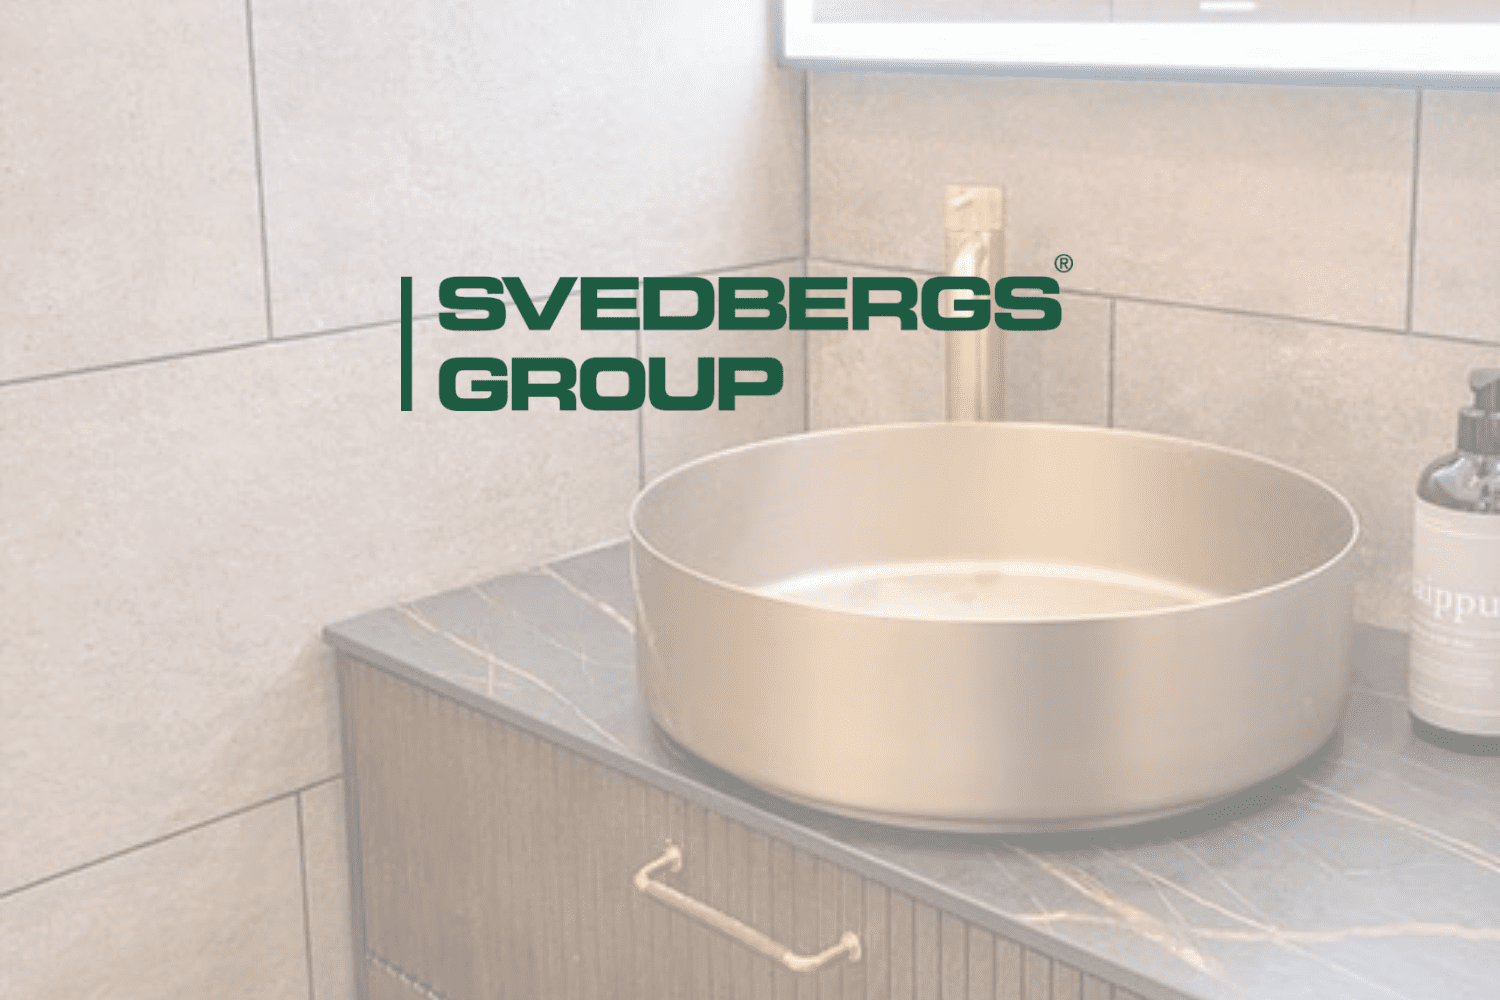 Svedbergs group header